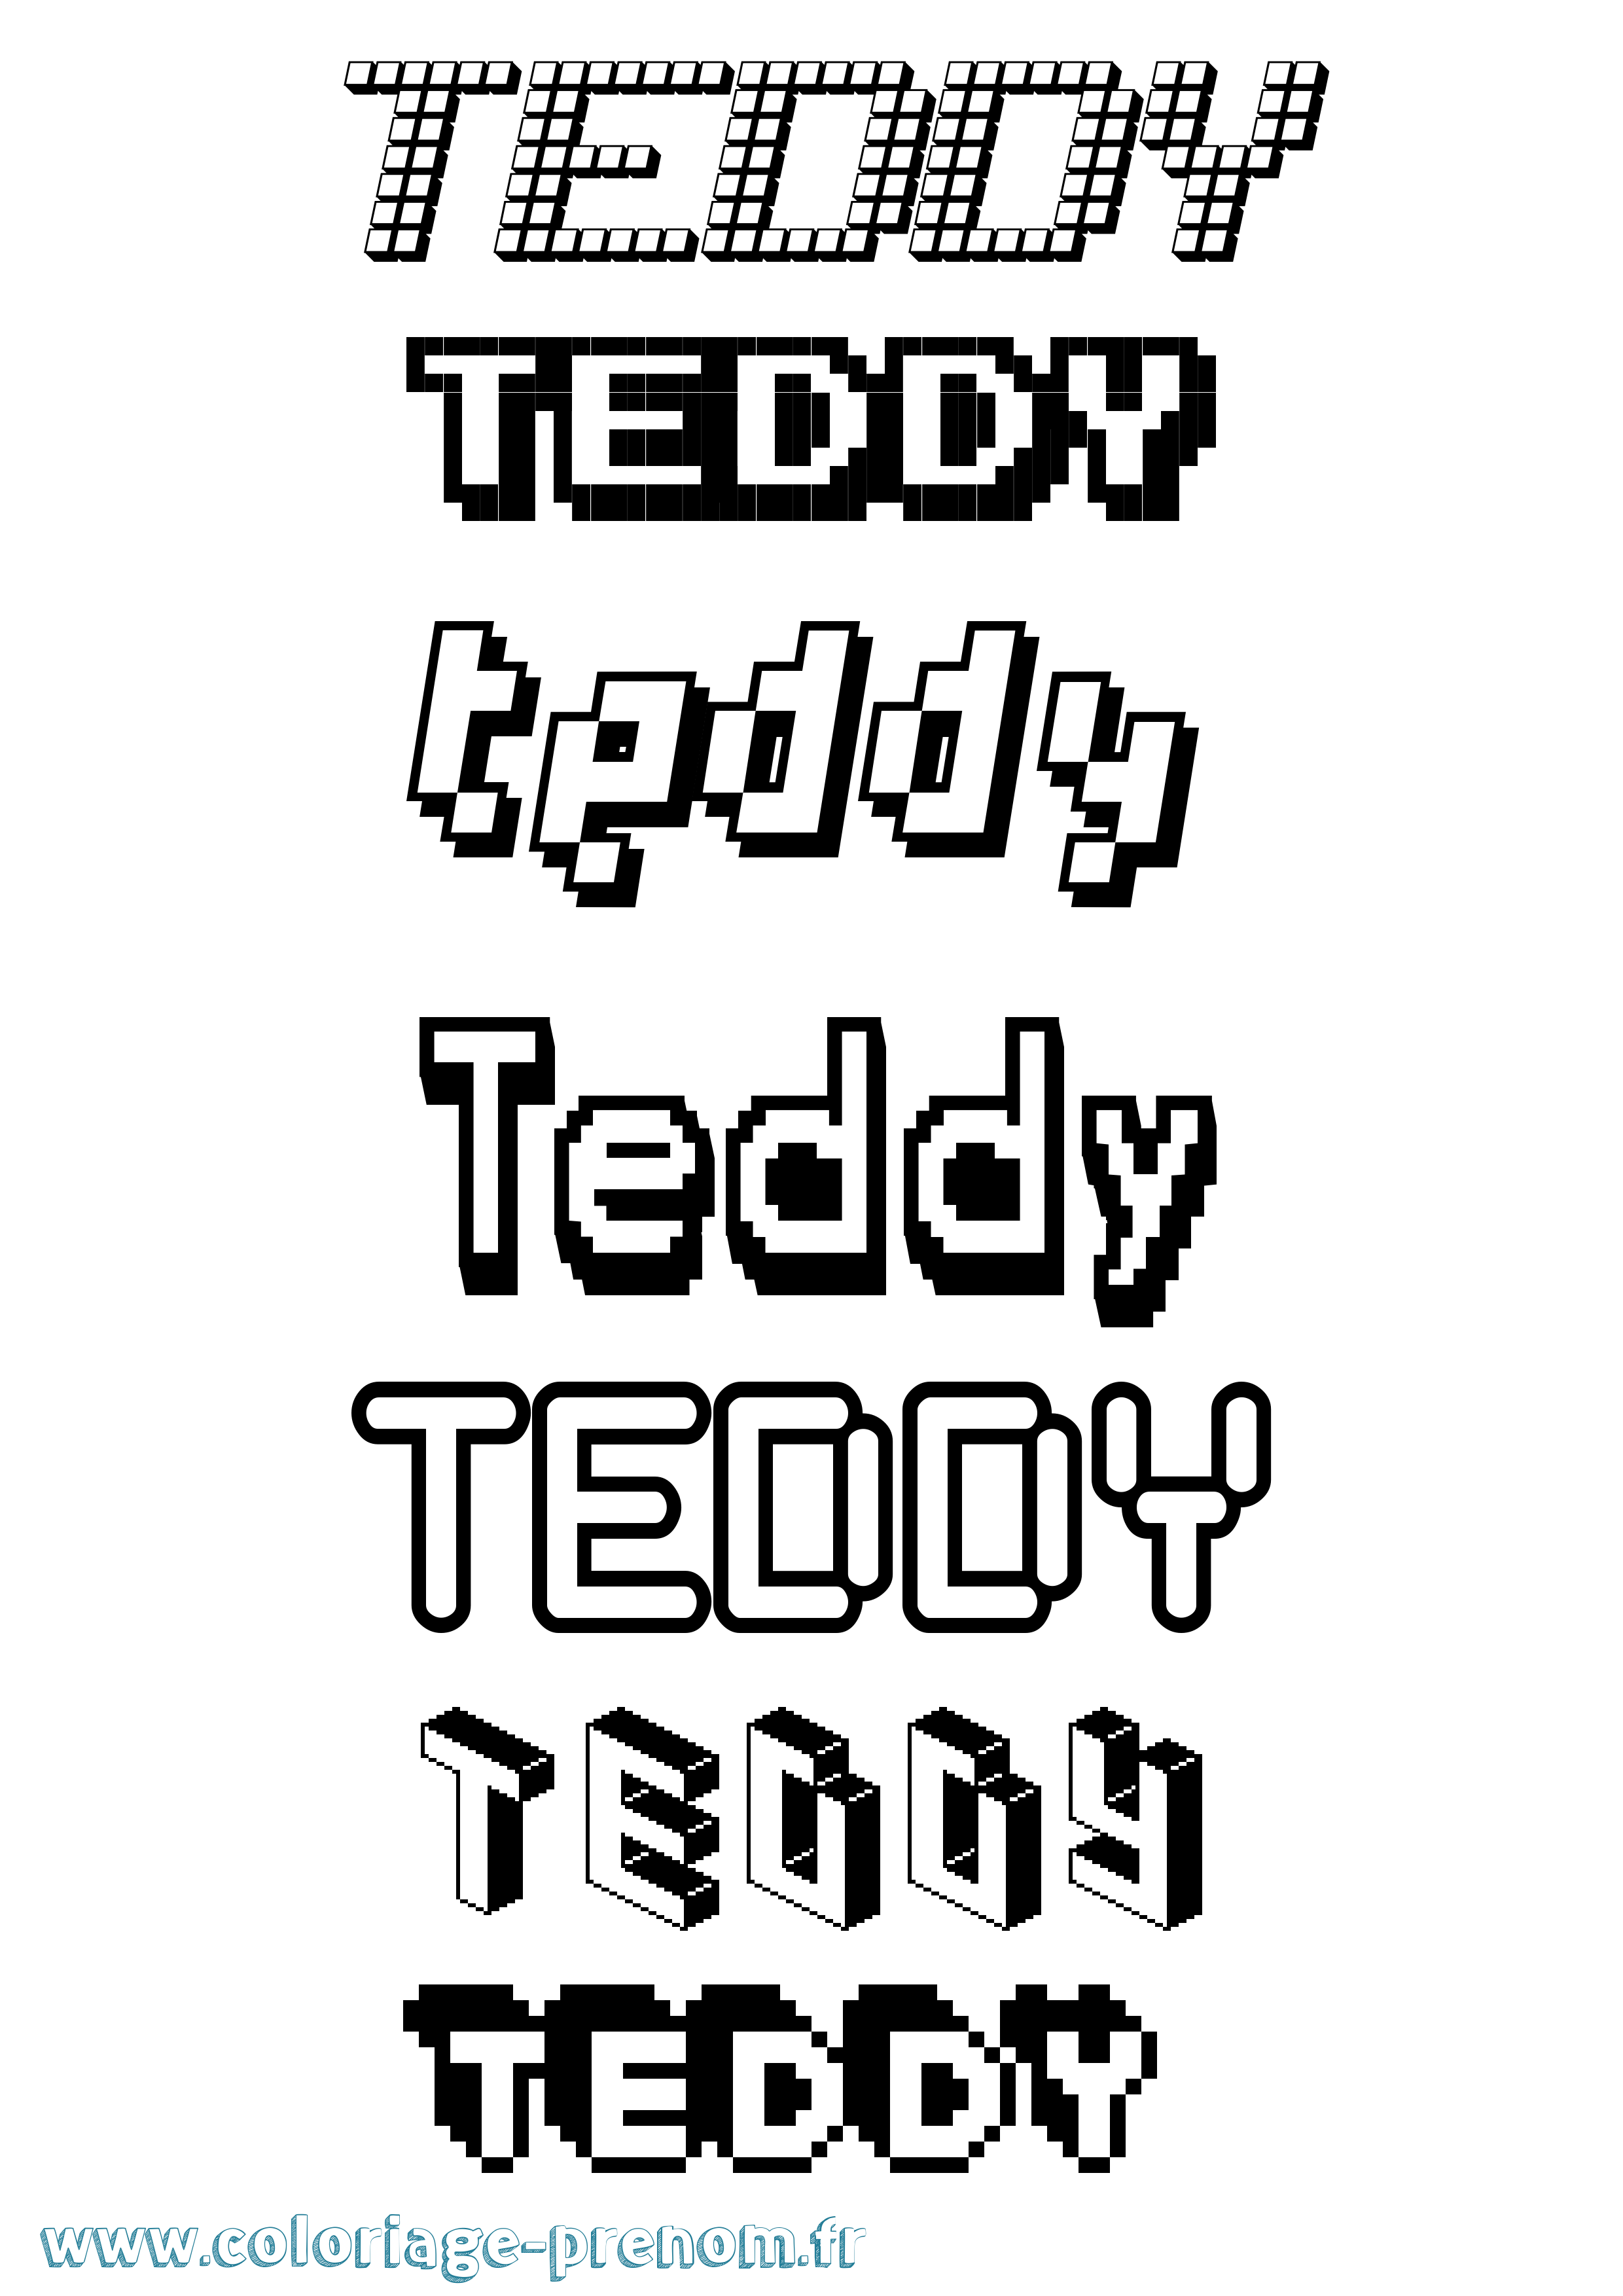 Coloriage prénom Teddy Pixel